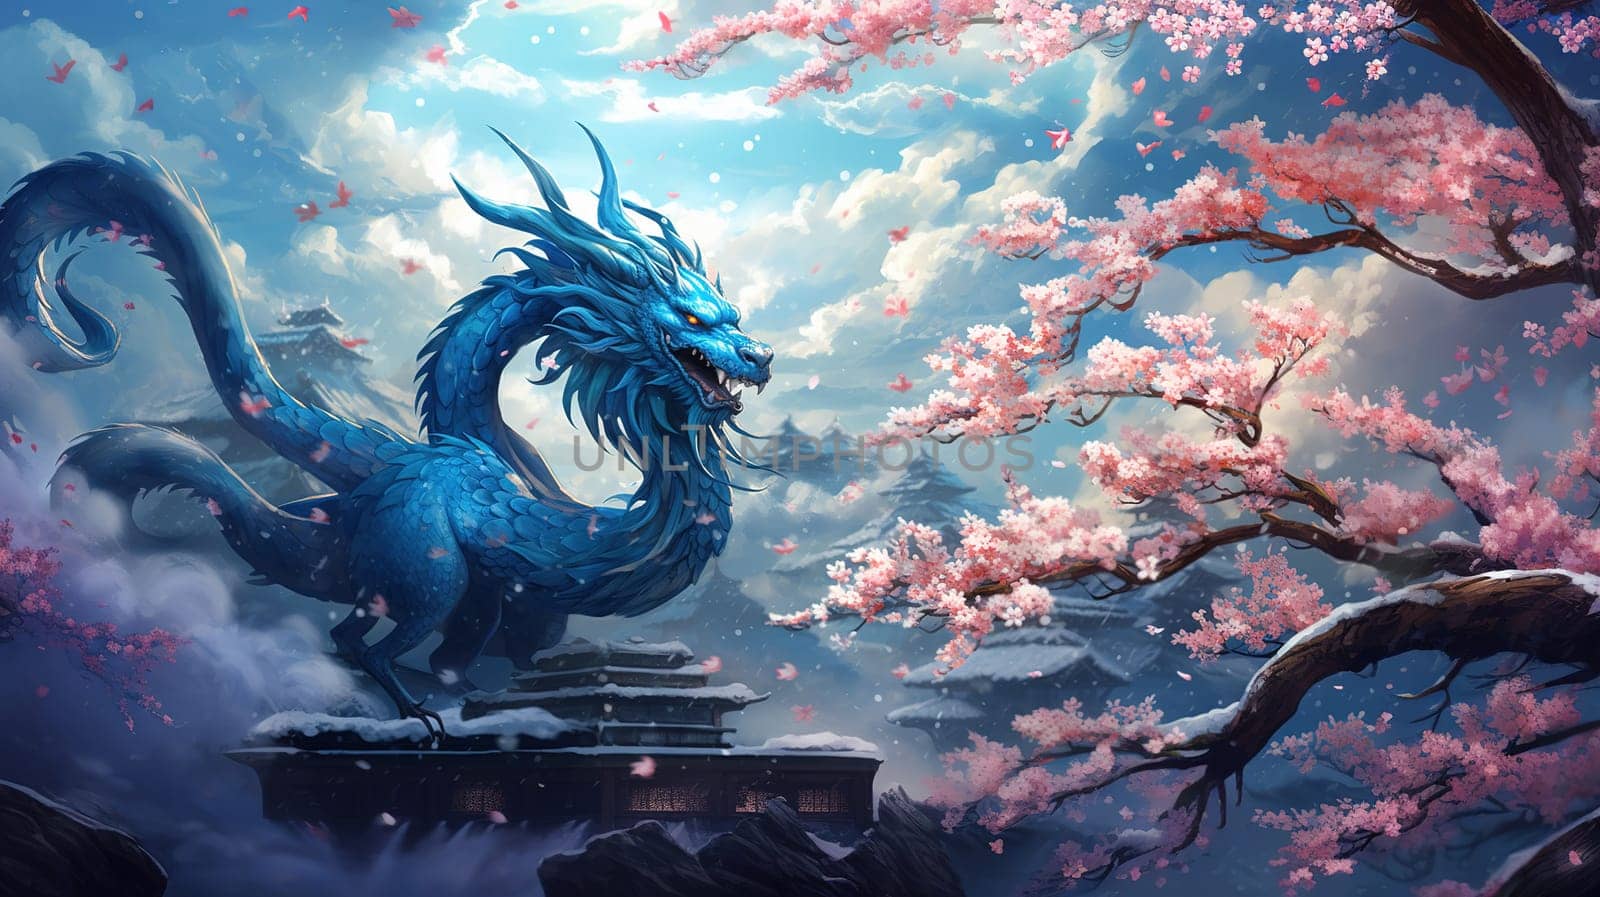 Illustration of big blue dragon symbol of nachak and rains, flower pink sakura, Chinese lunar calendar by KaterinaDalemans